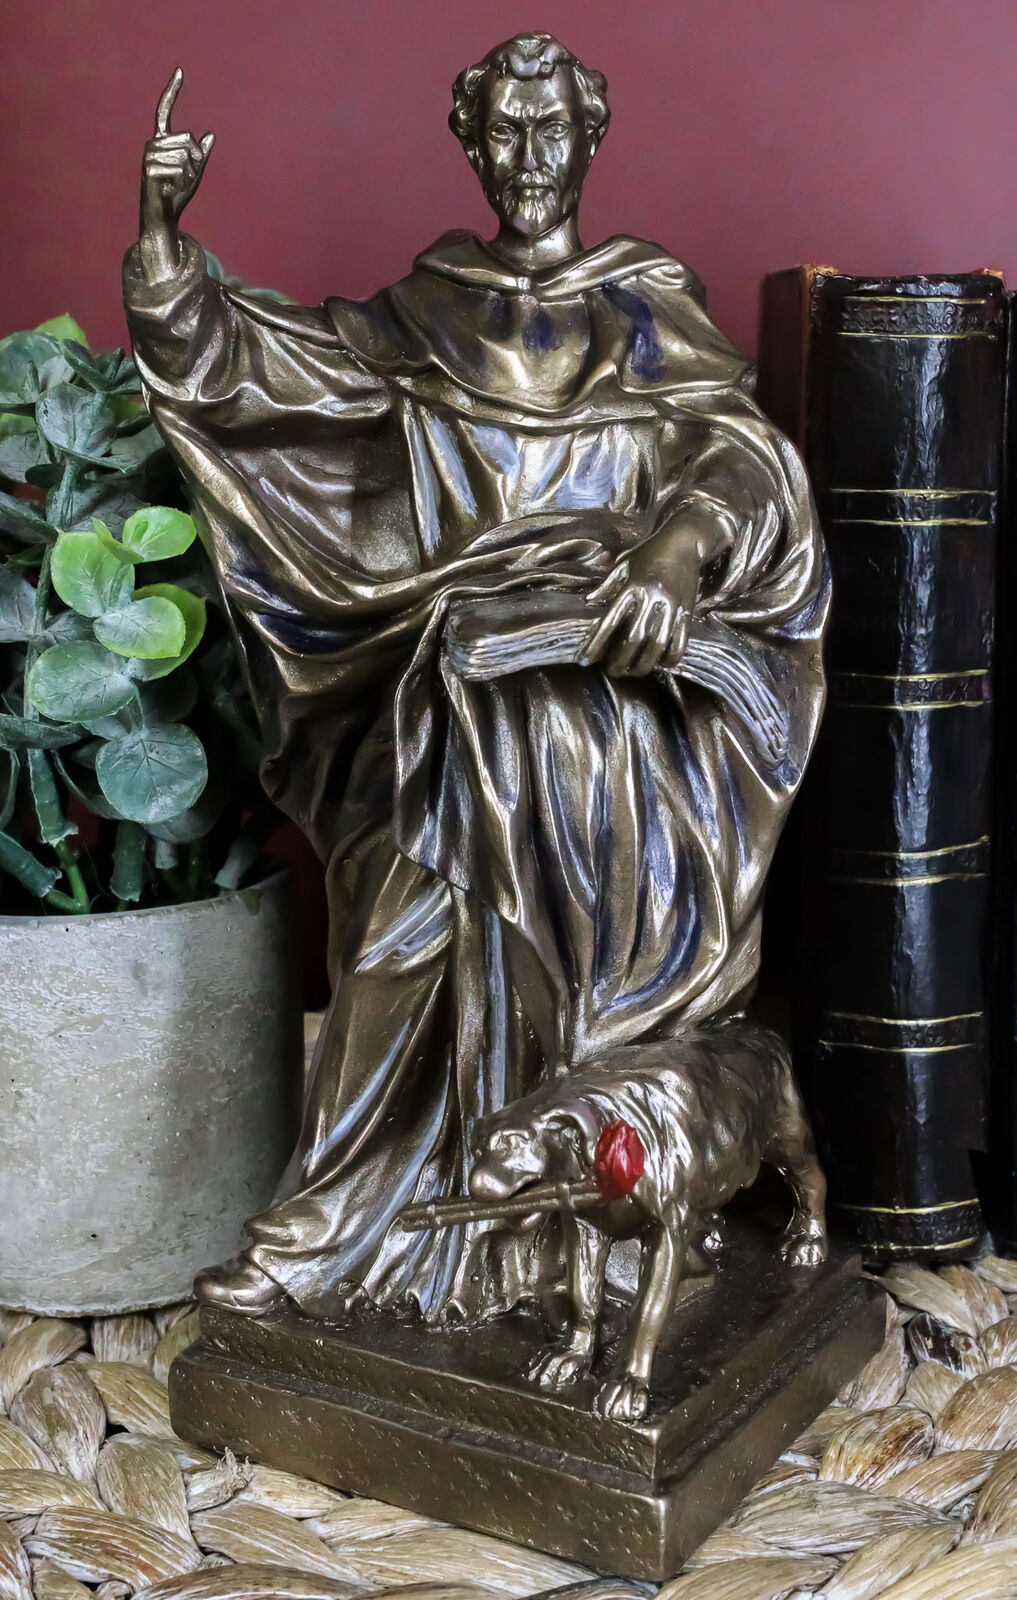 Saint Dominic Figurine Dominican Order Catholic Priest Religious Gift Sculpture